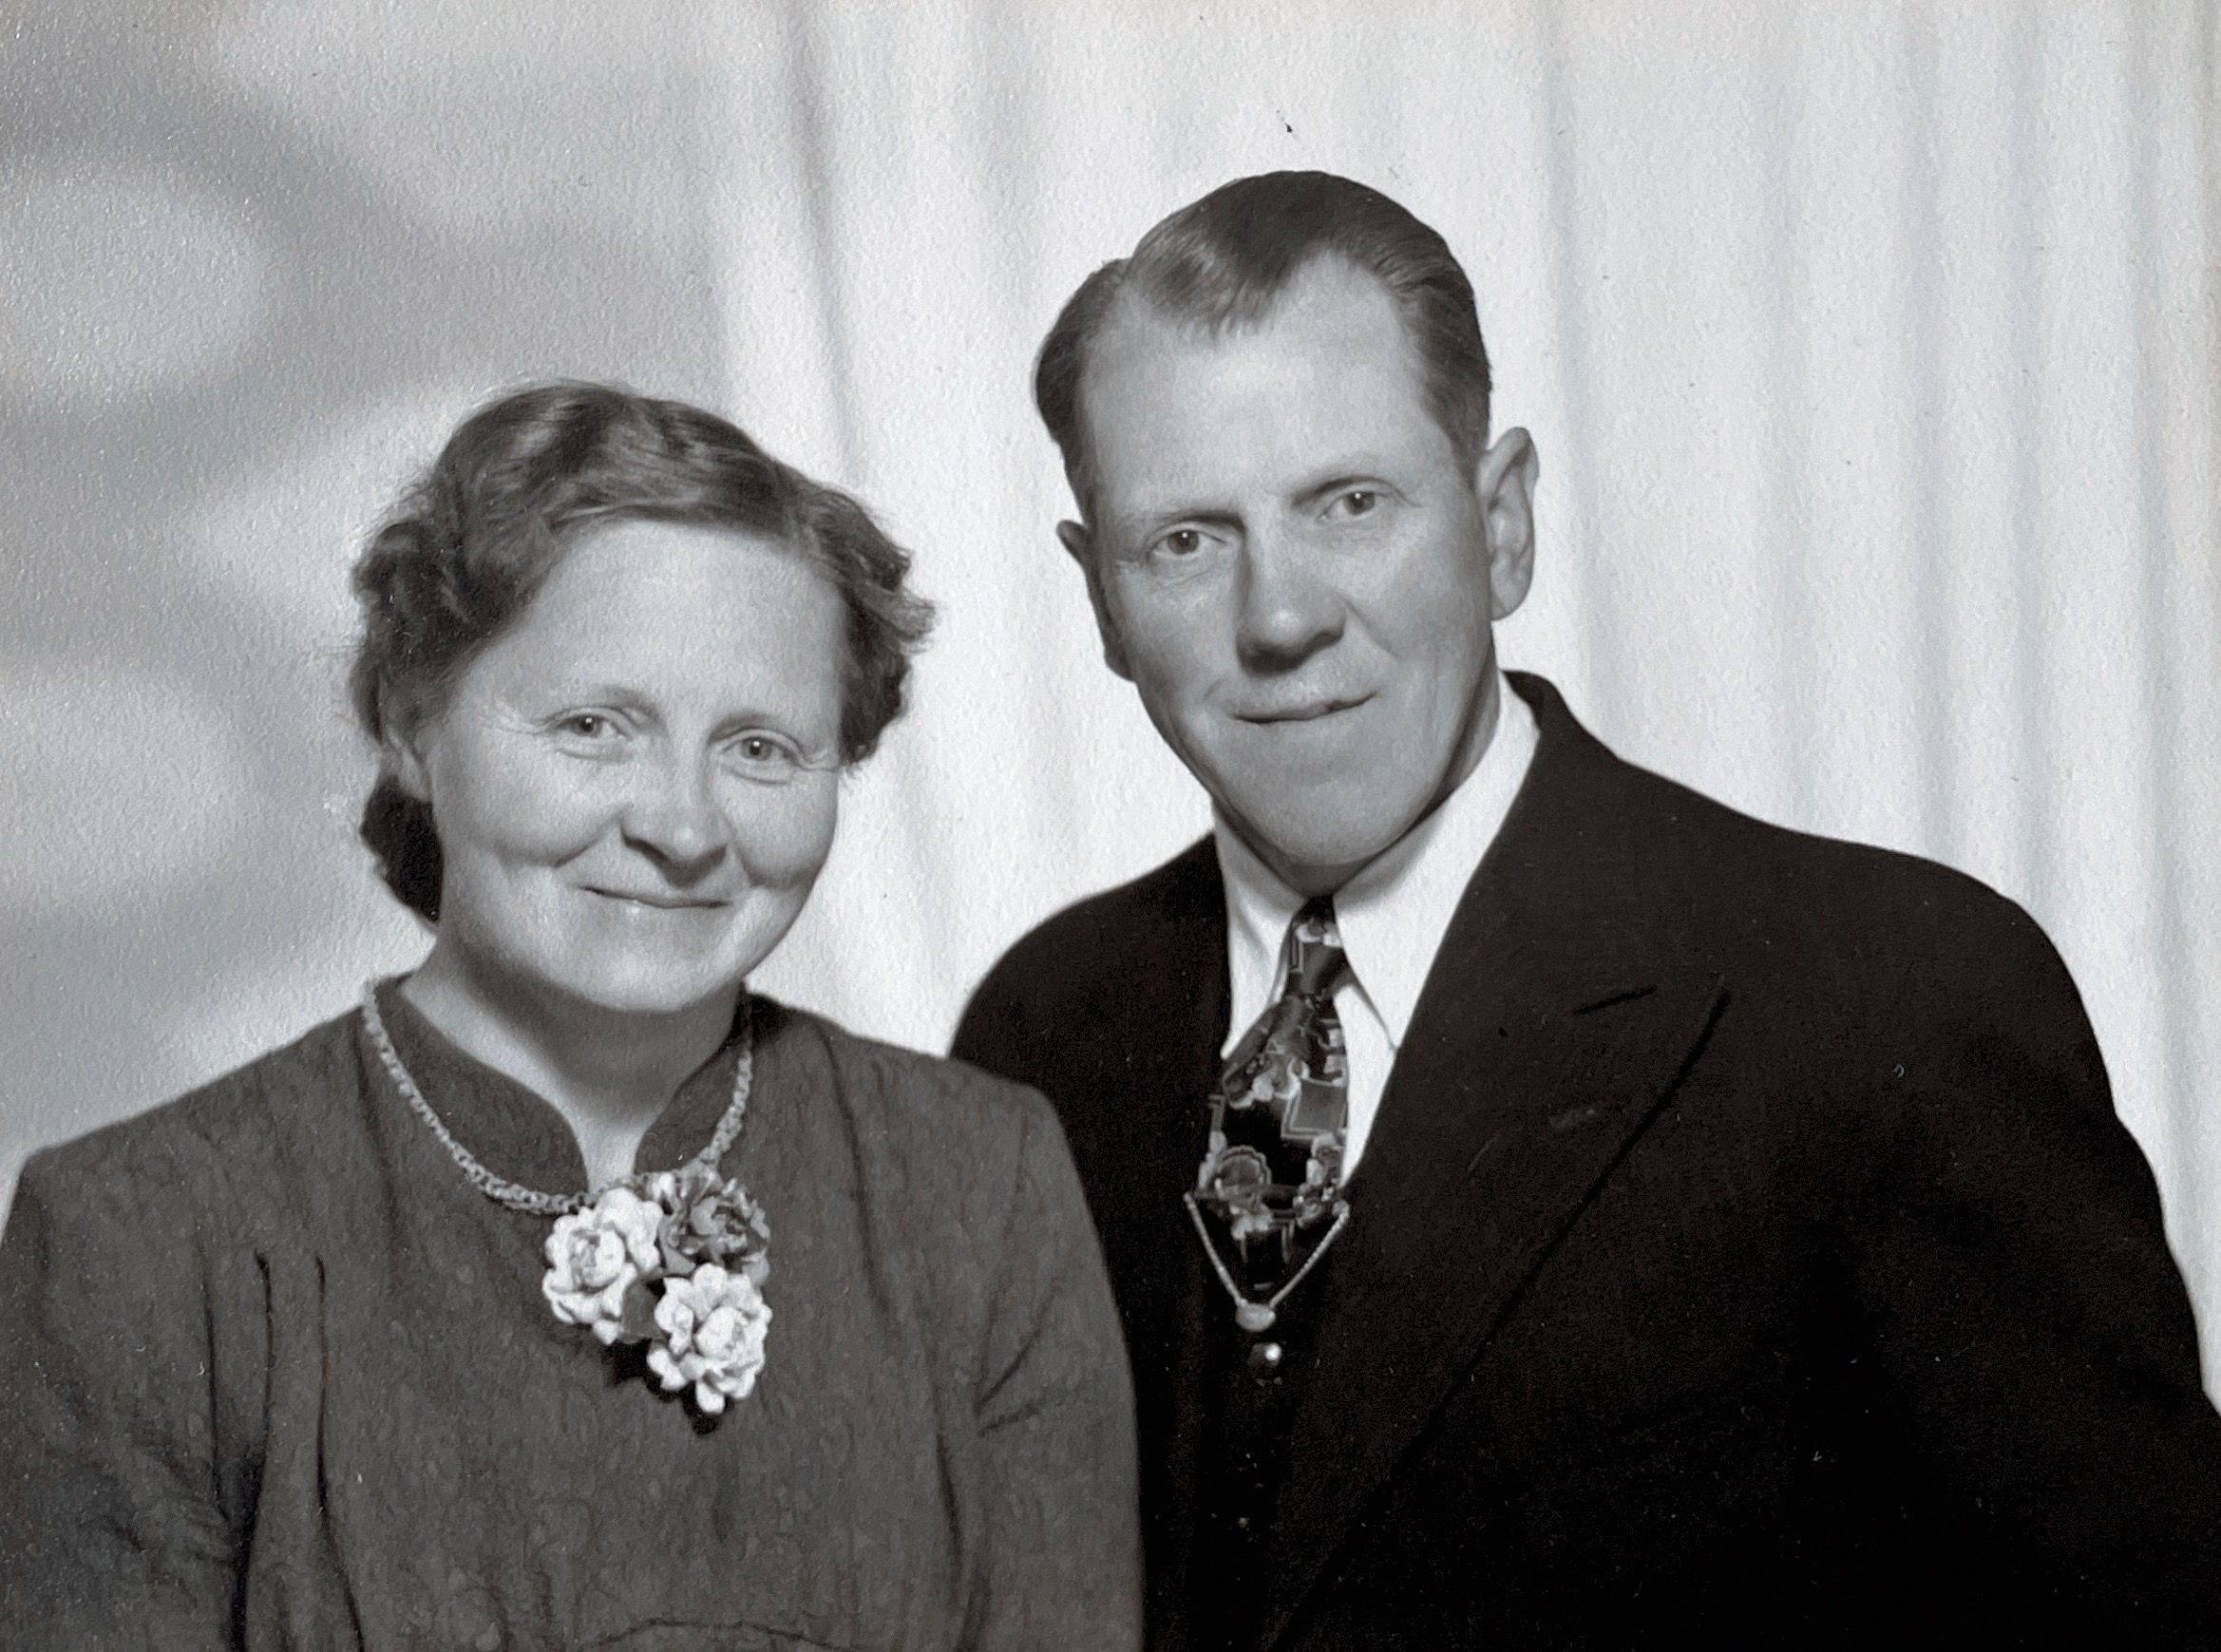 Tante Birgit og onkel Kansgar, 1953